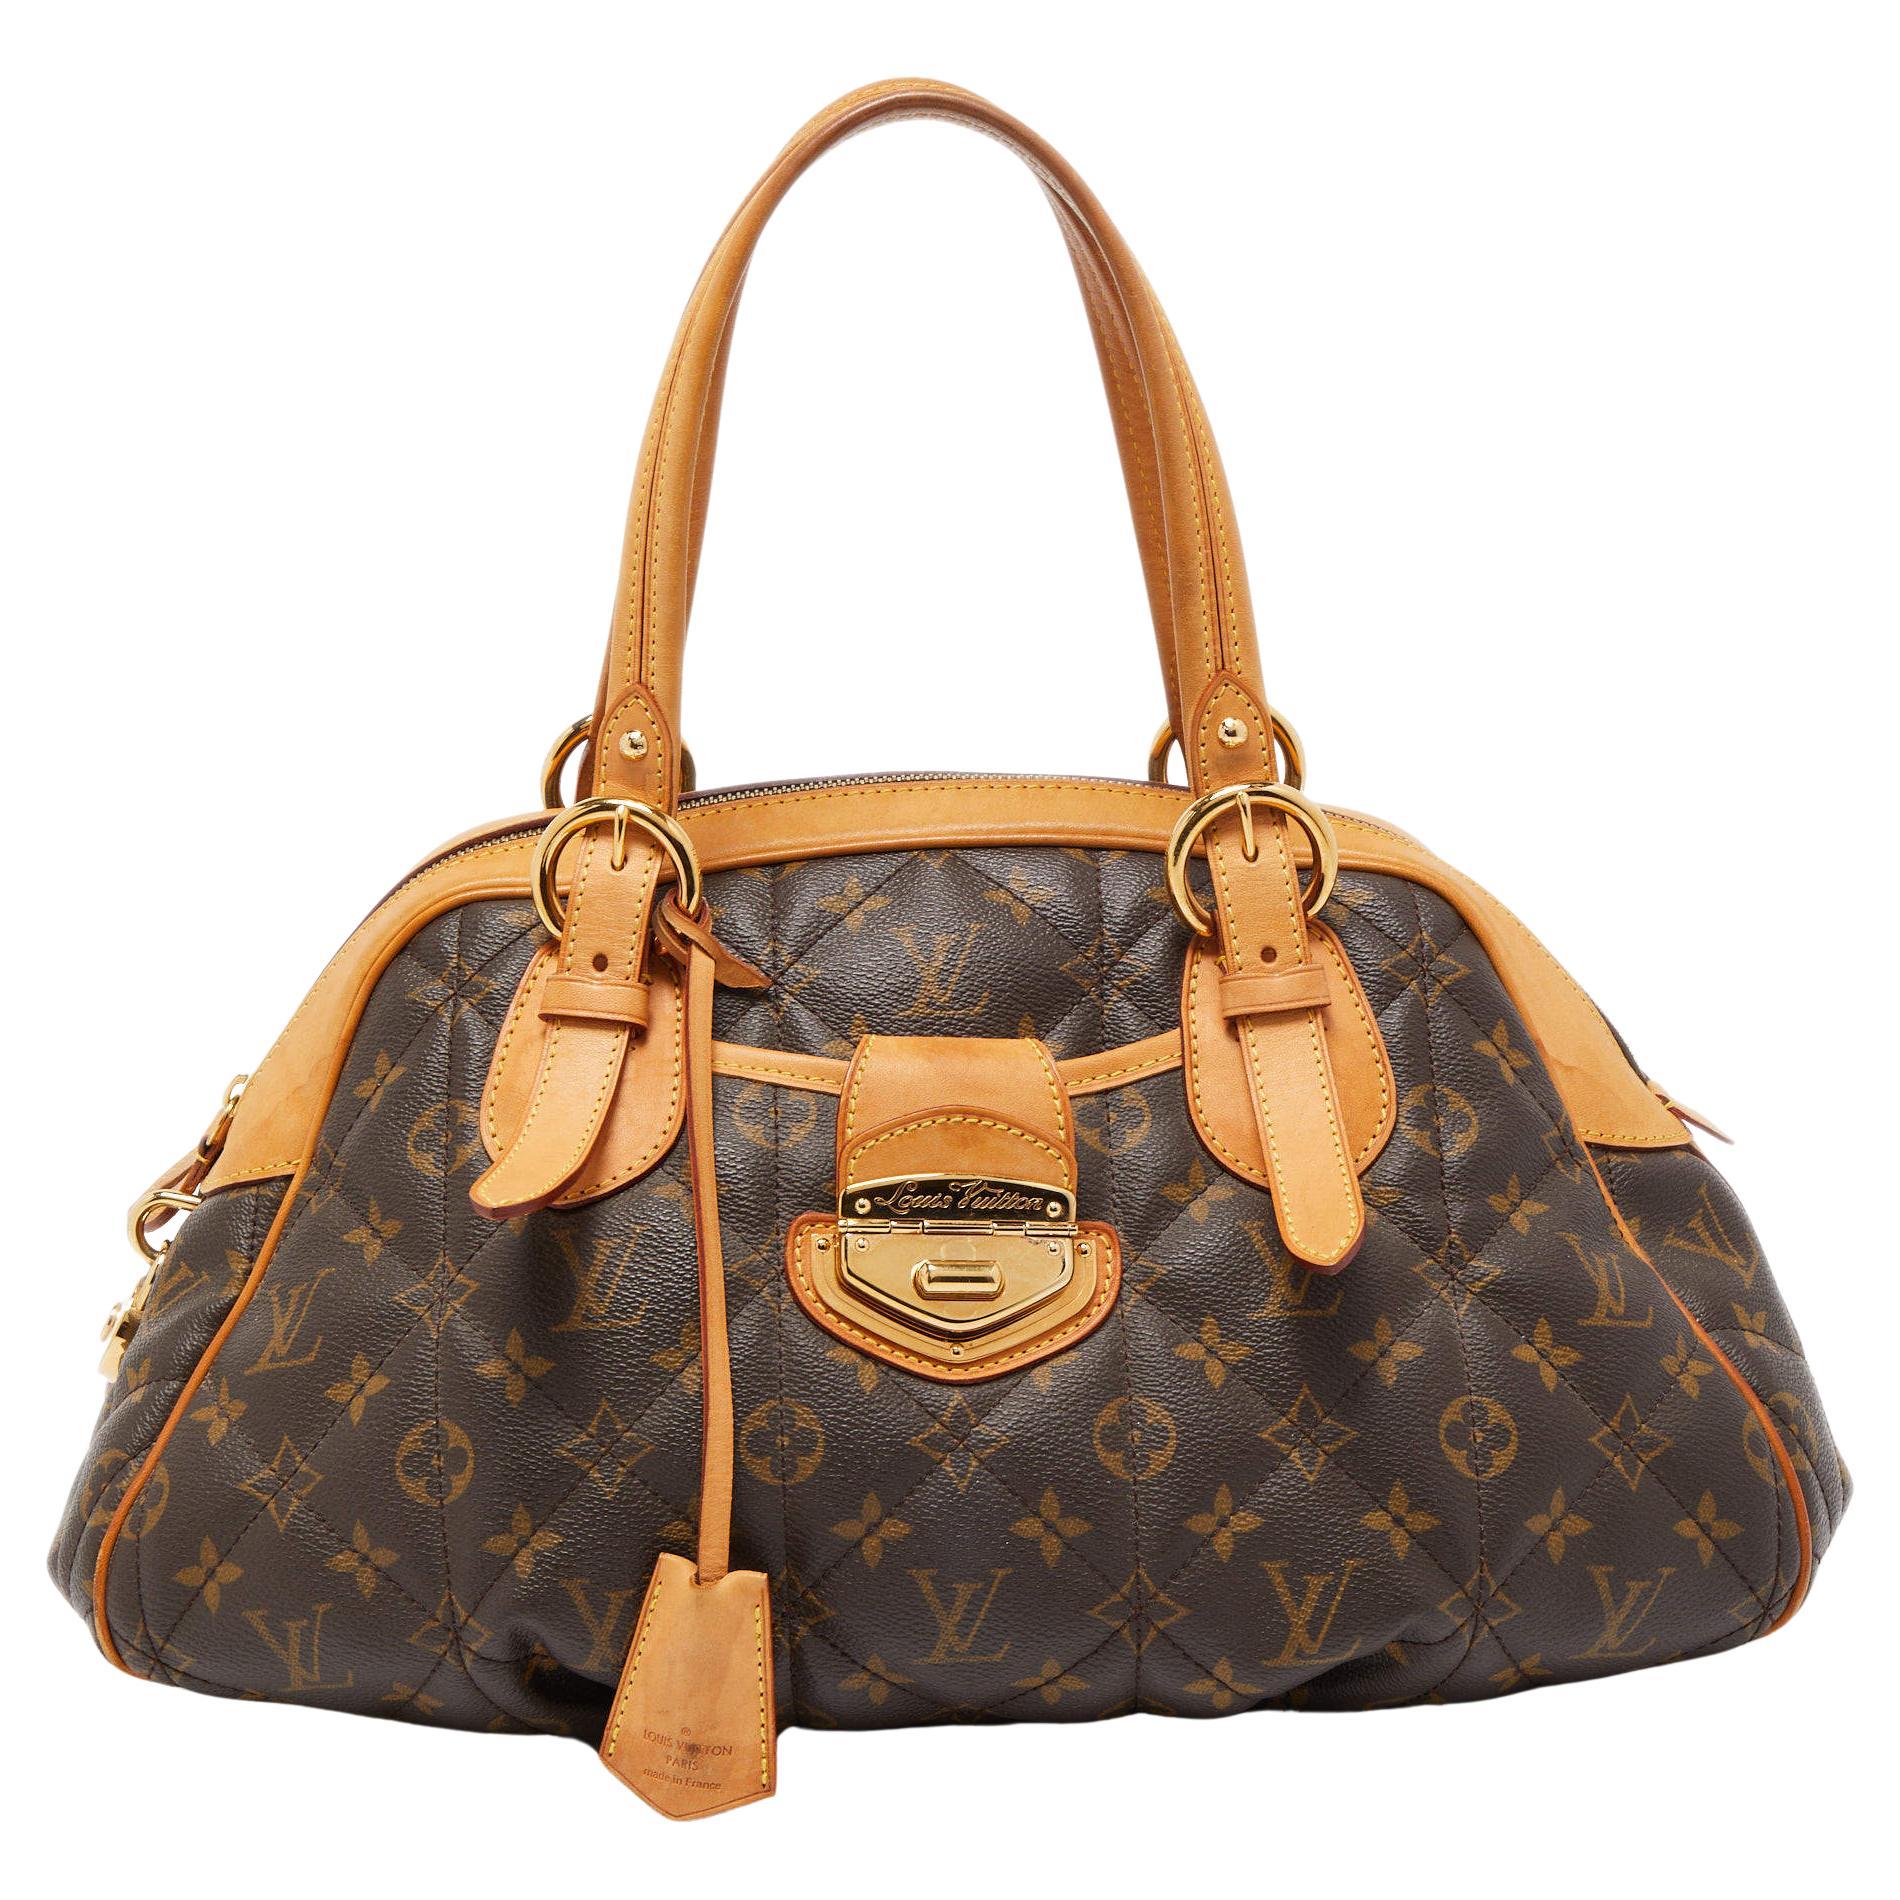 Louis Vuitton, Bags, Louis Vuitton Limited 208 Fallwinter Collection